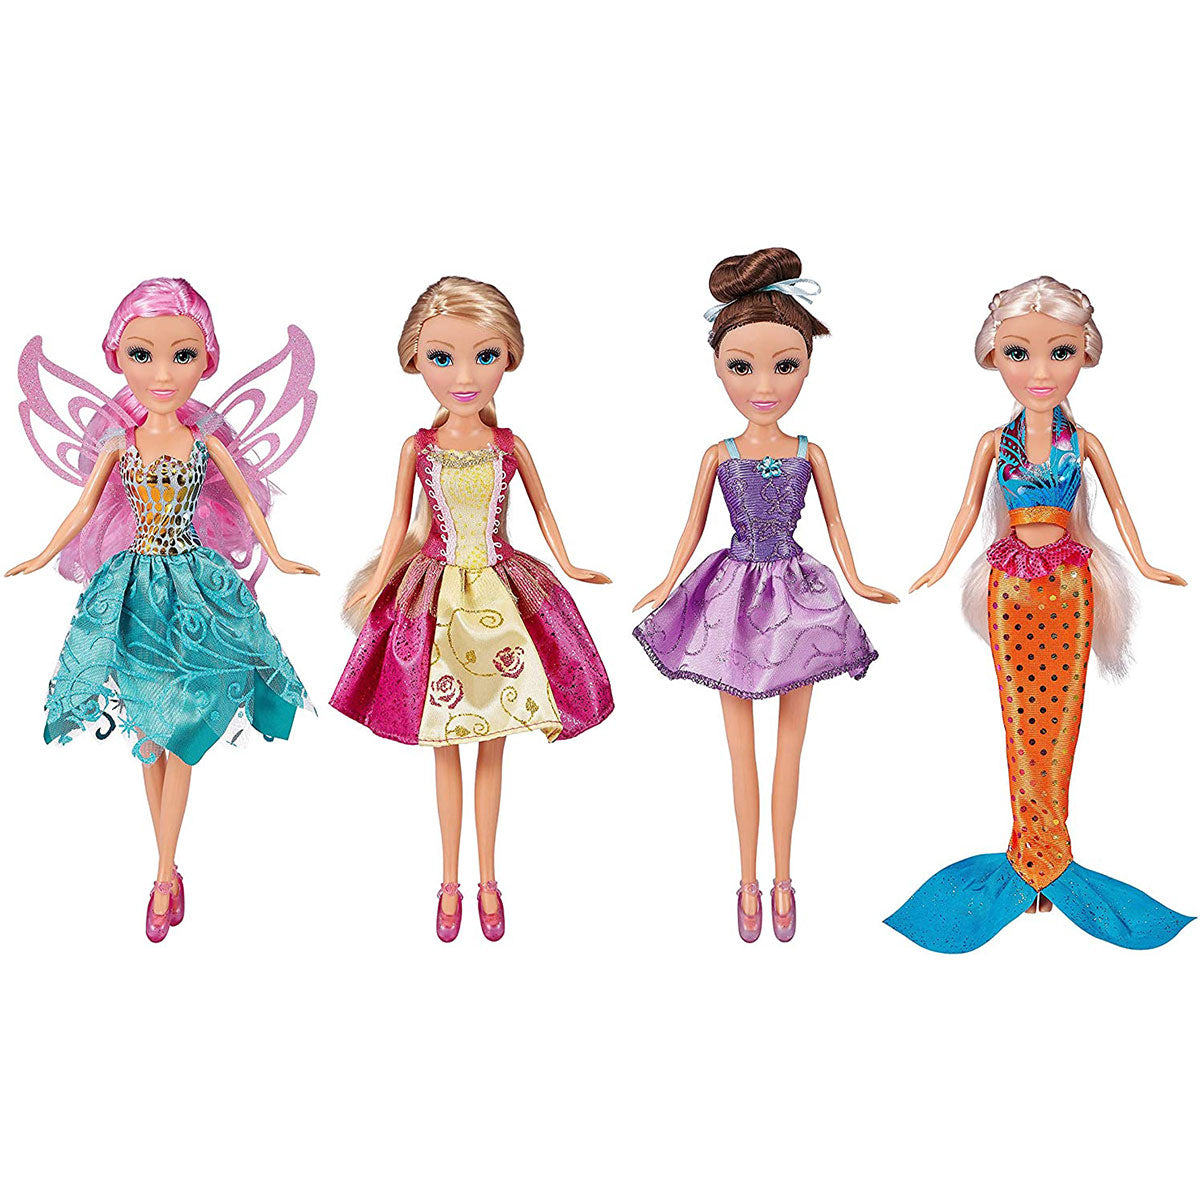 Glimma Girlz - Set of 4 Fantasy Dolls by ZURU (Styles vary - One Supplied)